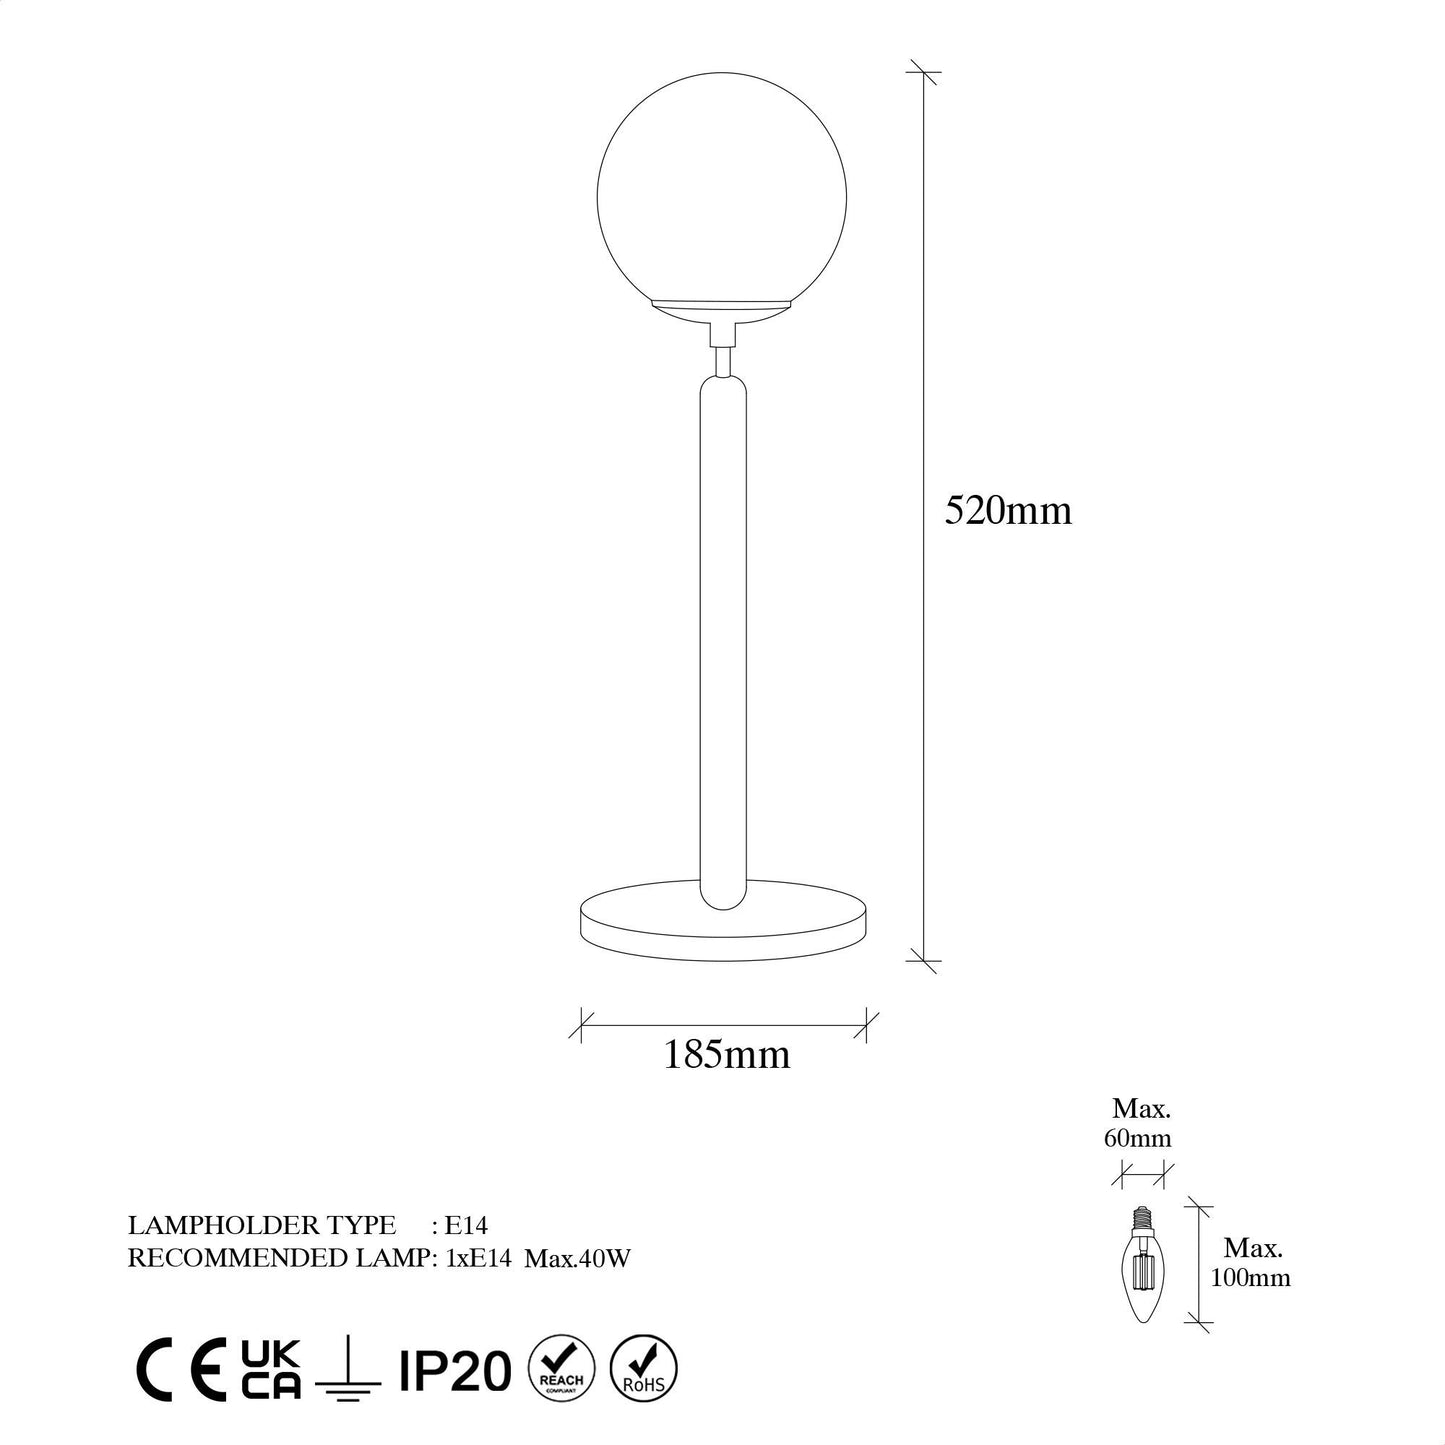 King - 11462 - Table Lamp